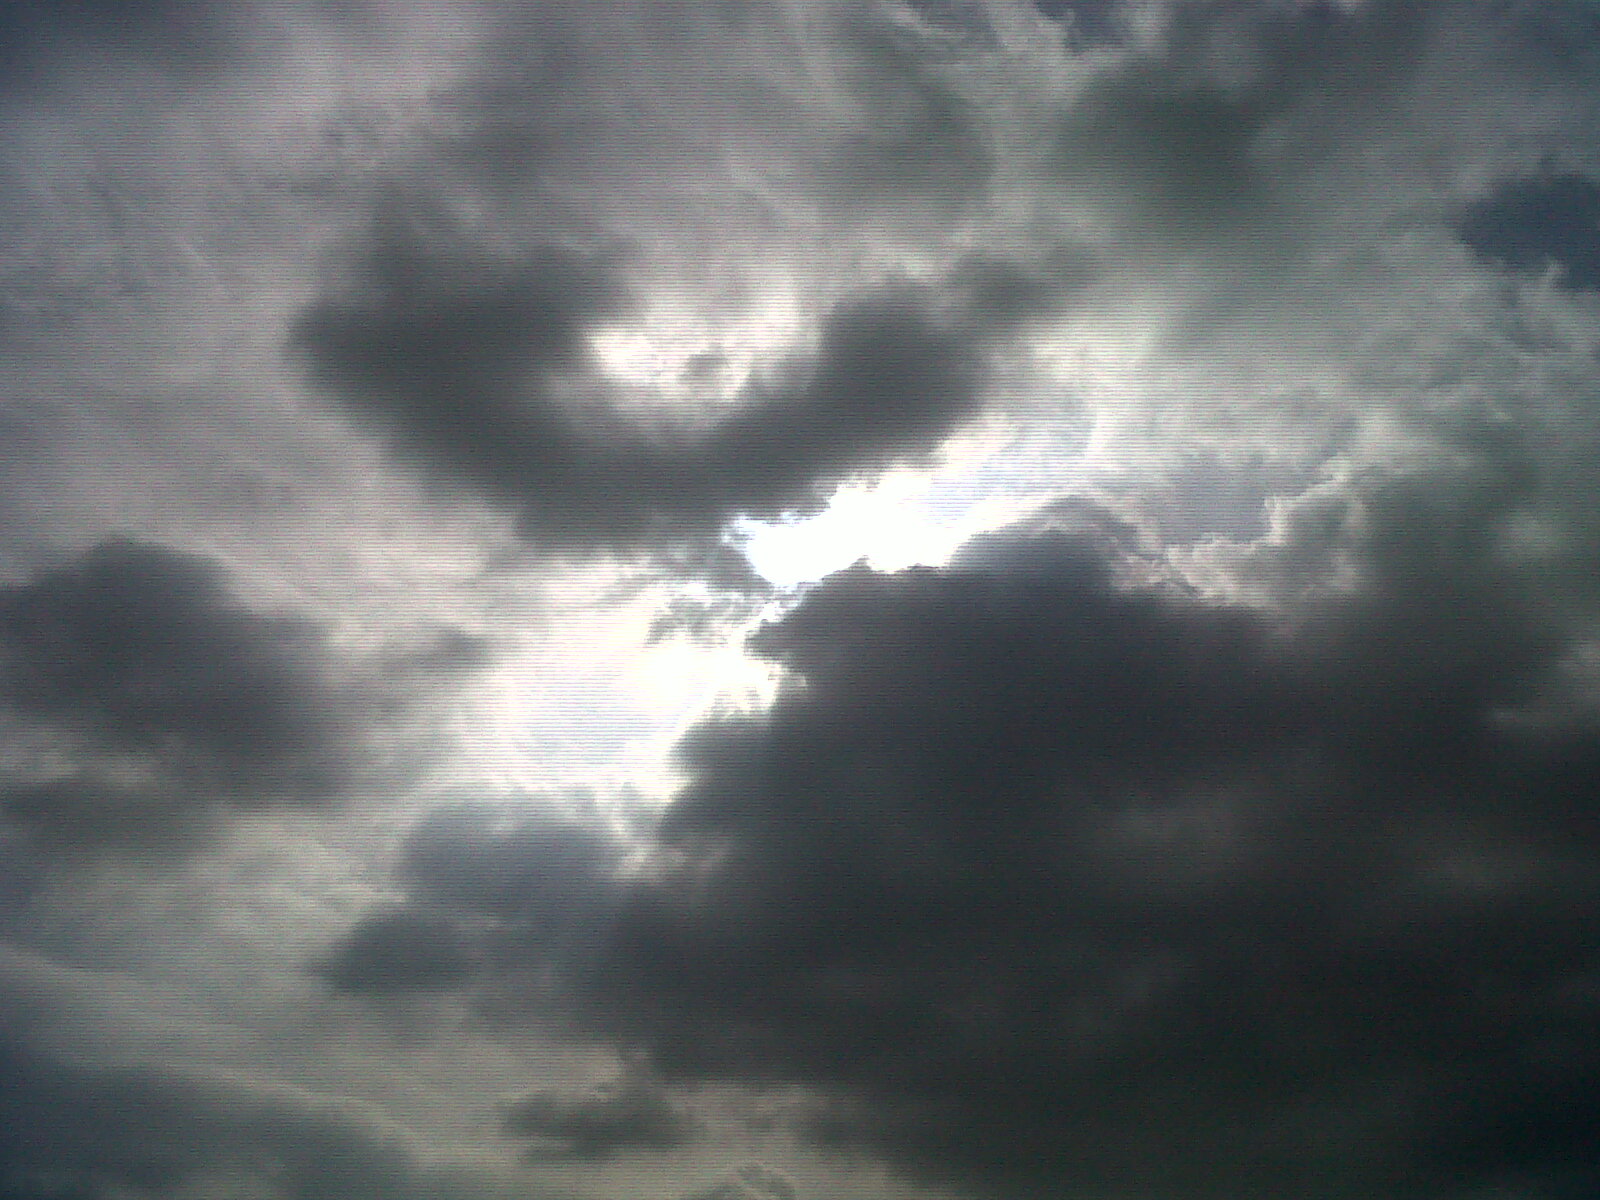 Dark cloudy sky - West London Waste